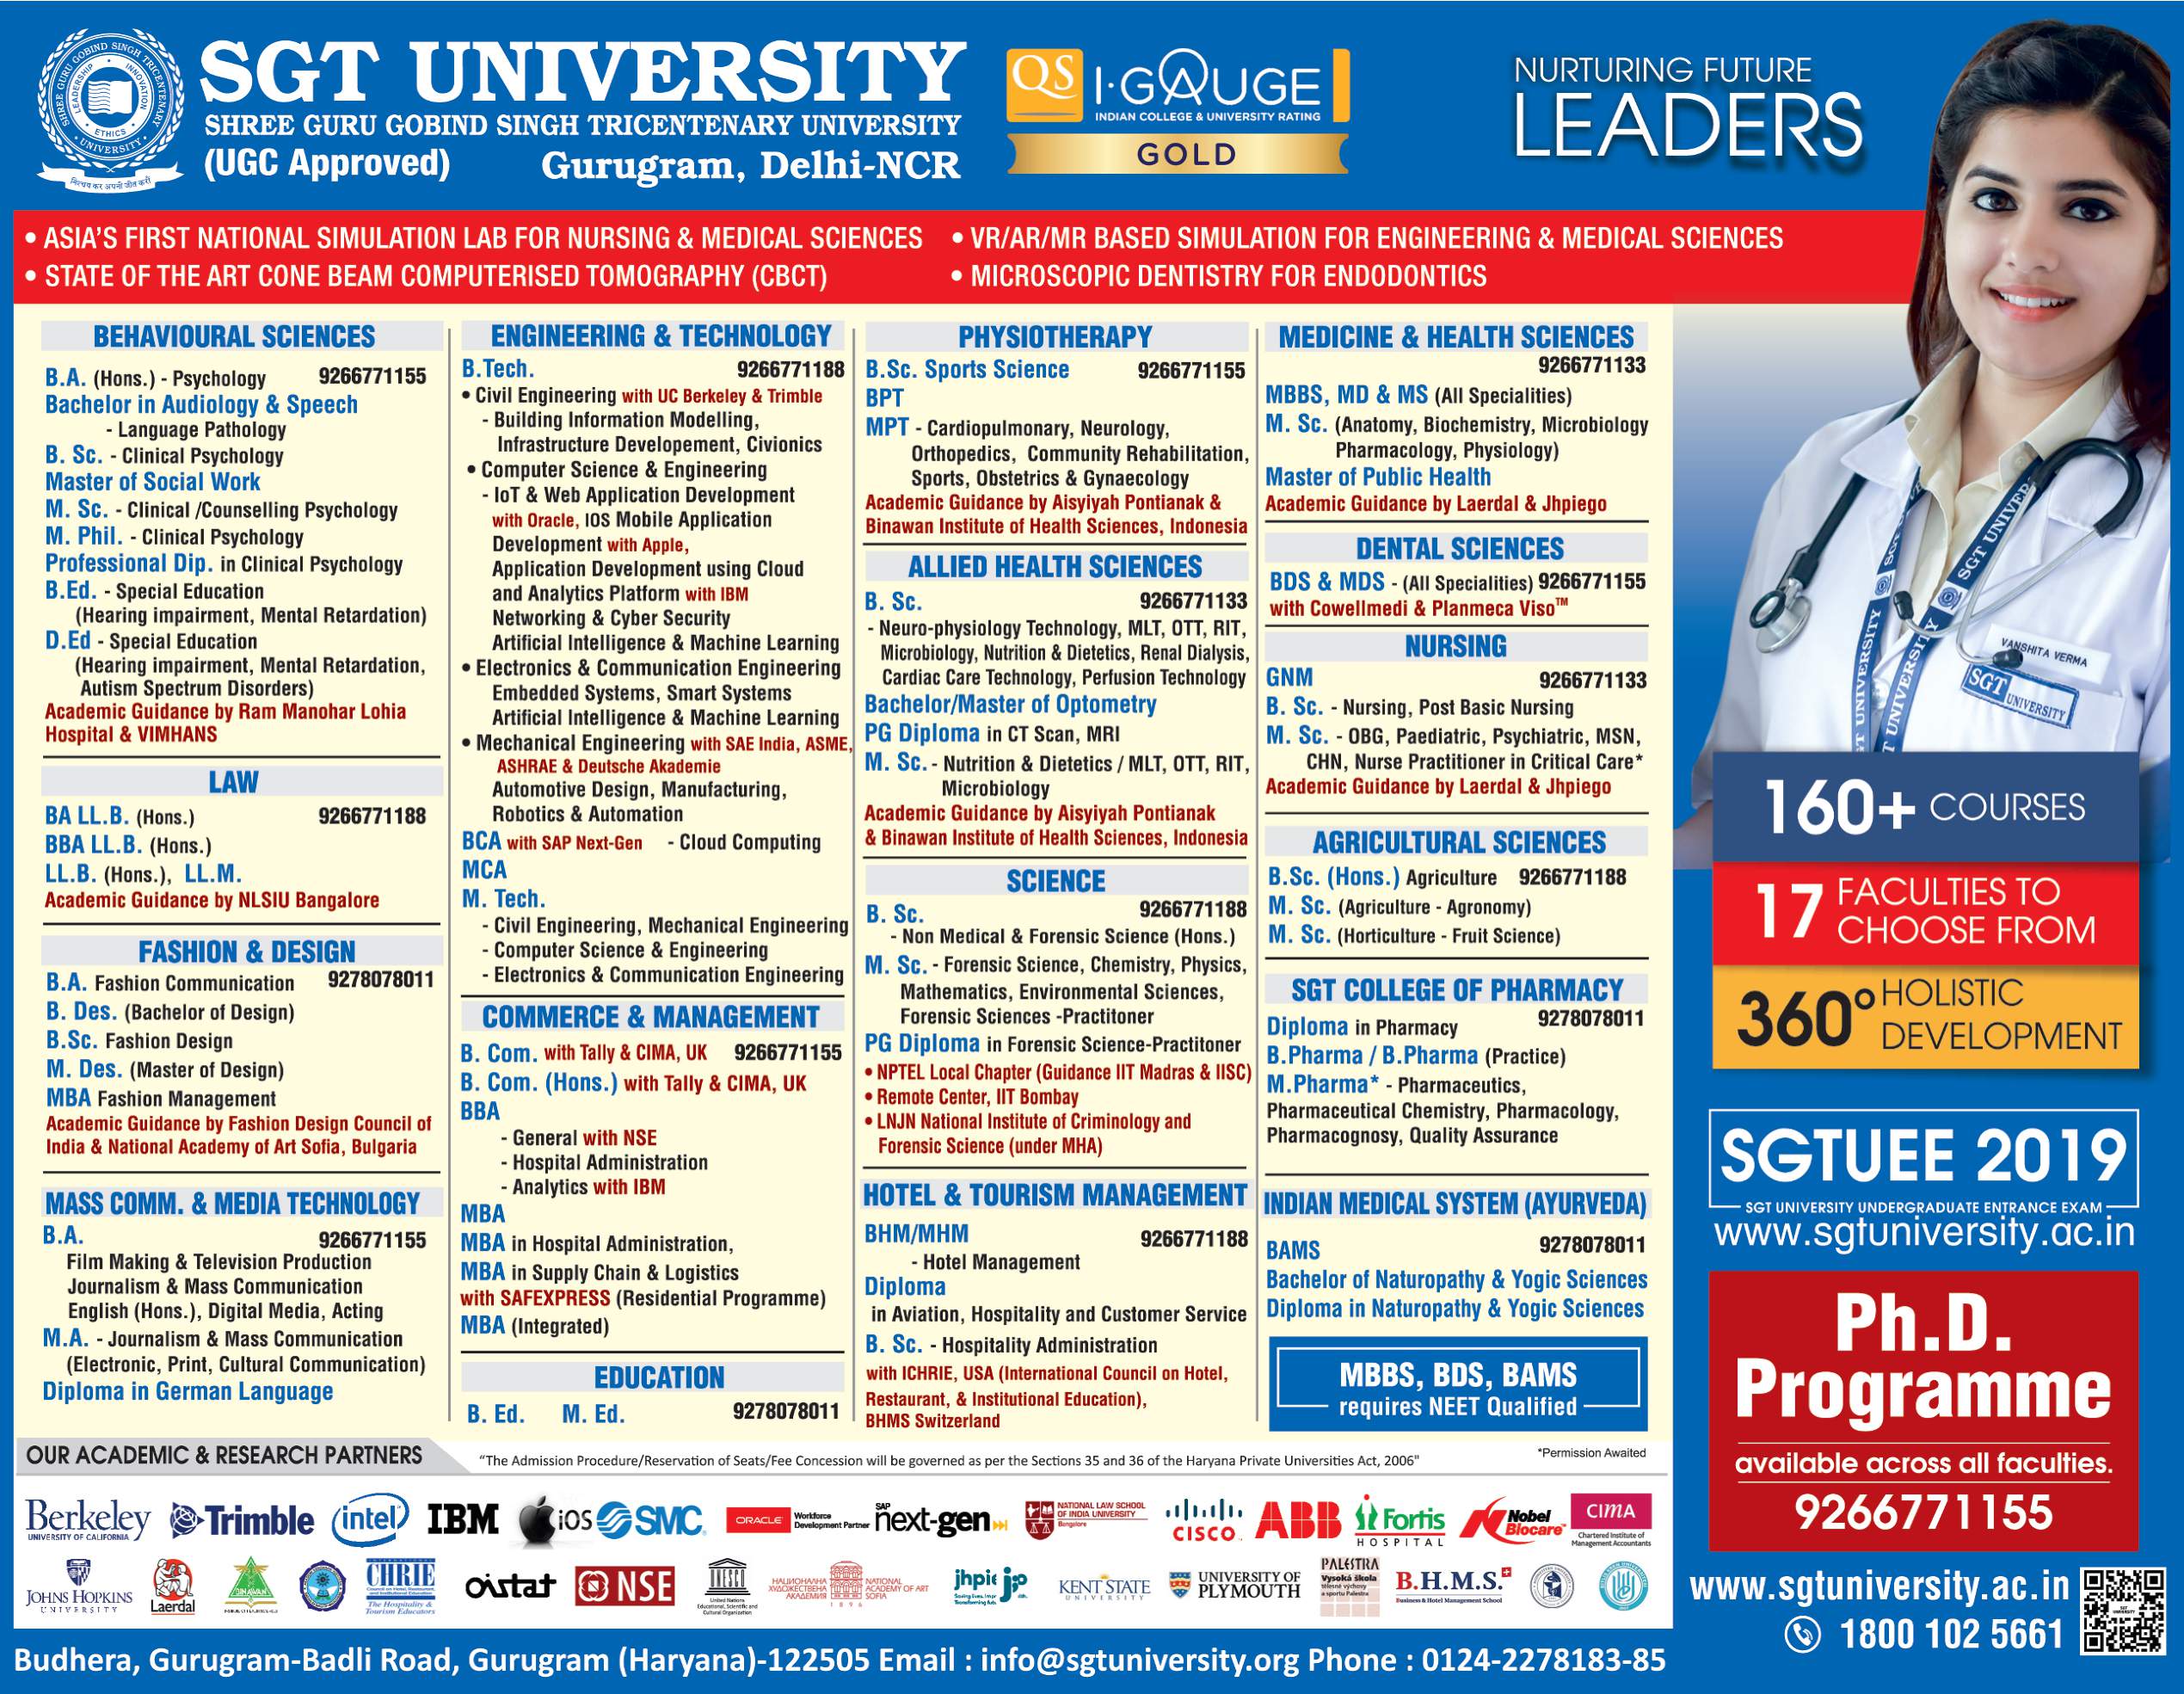 sgt-university-ph-d-programme-ad-dainik-jagran-dehi-02-08-2019.jpg